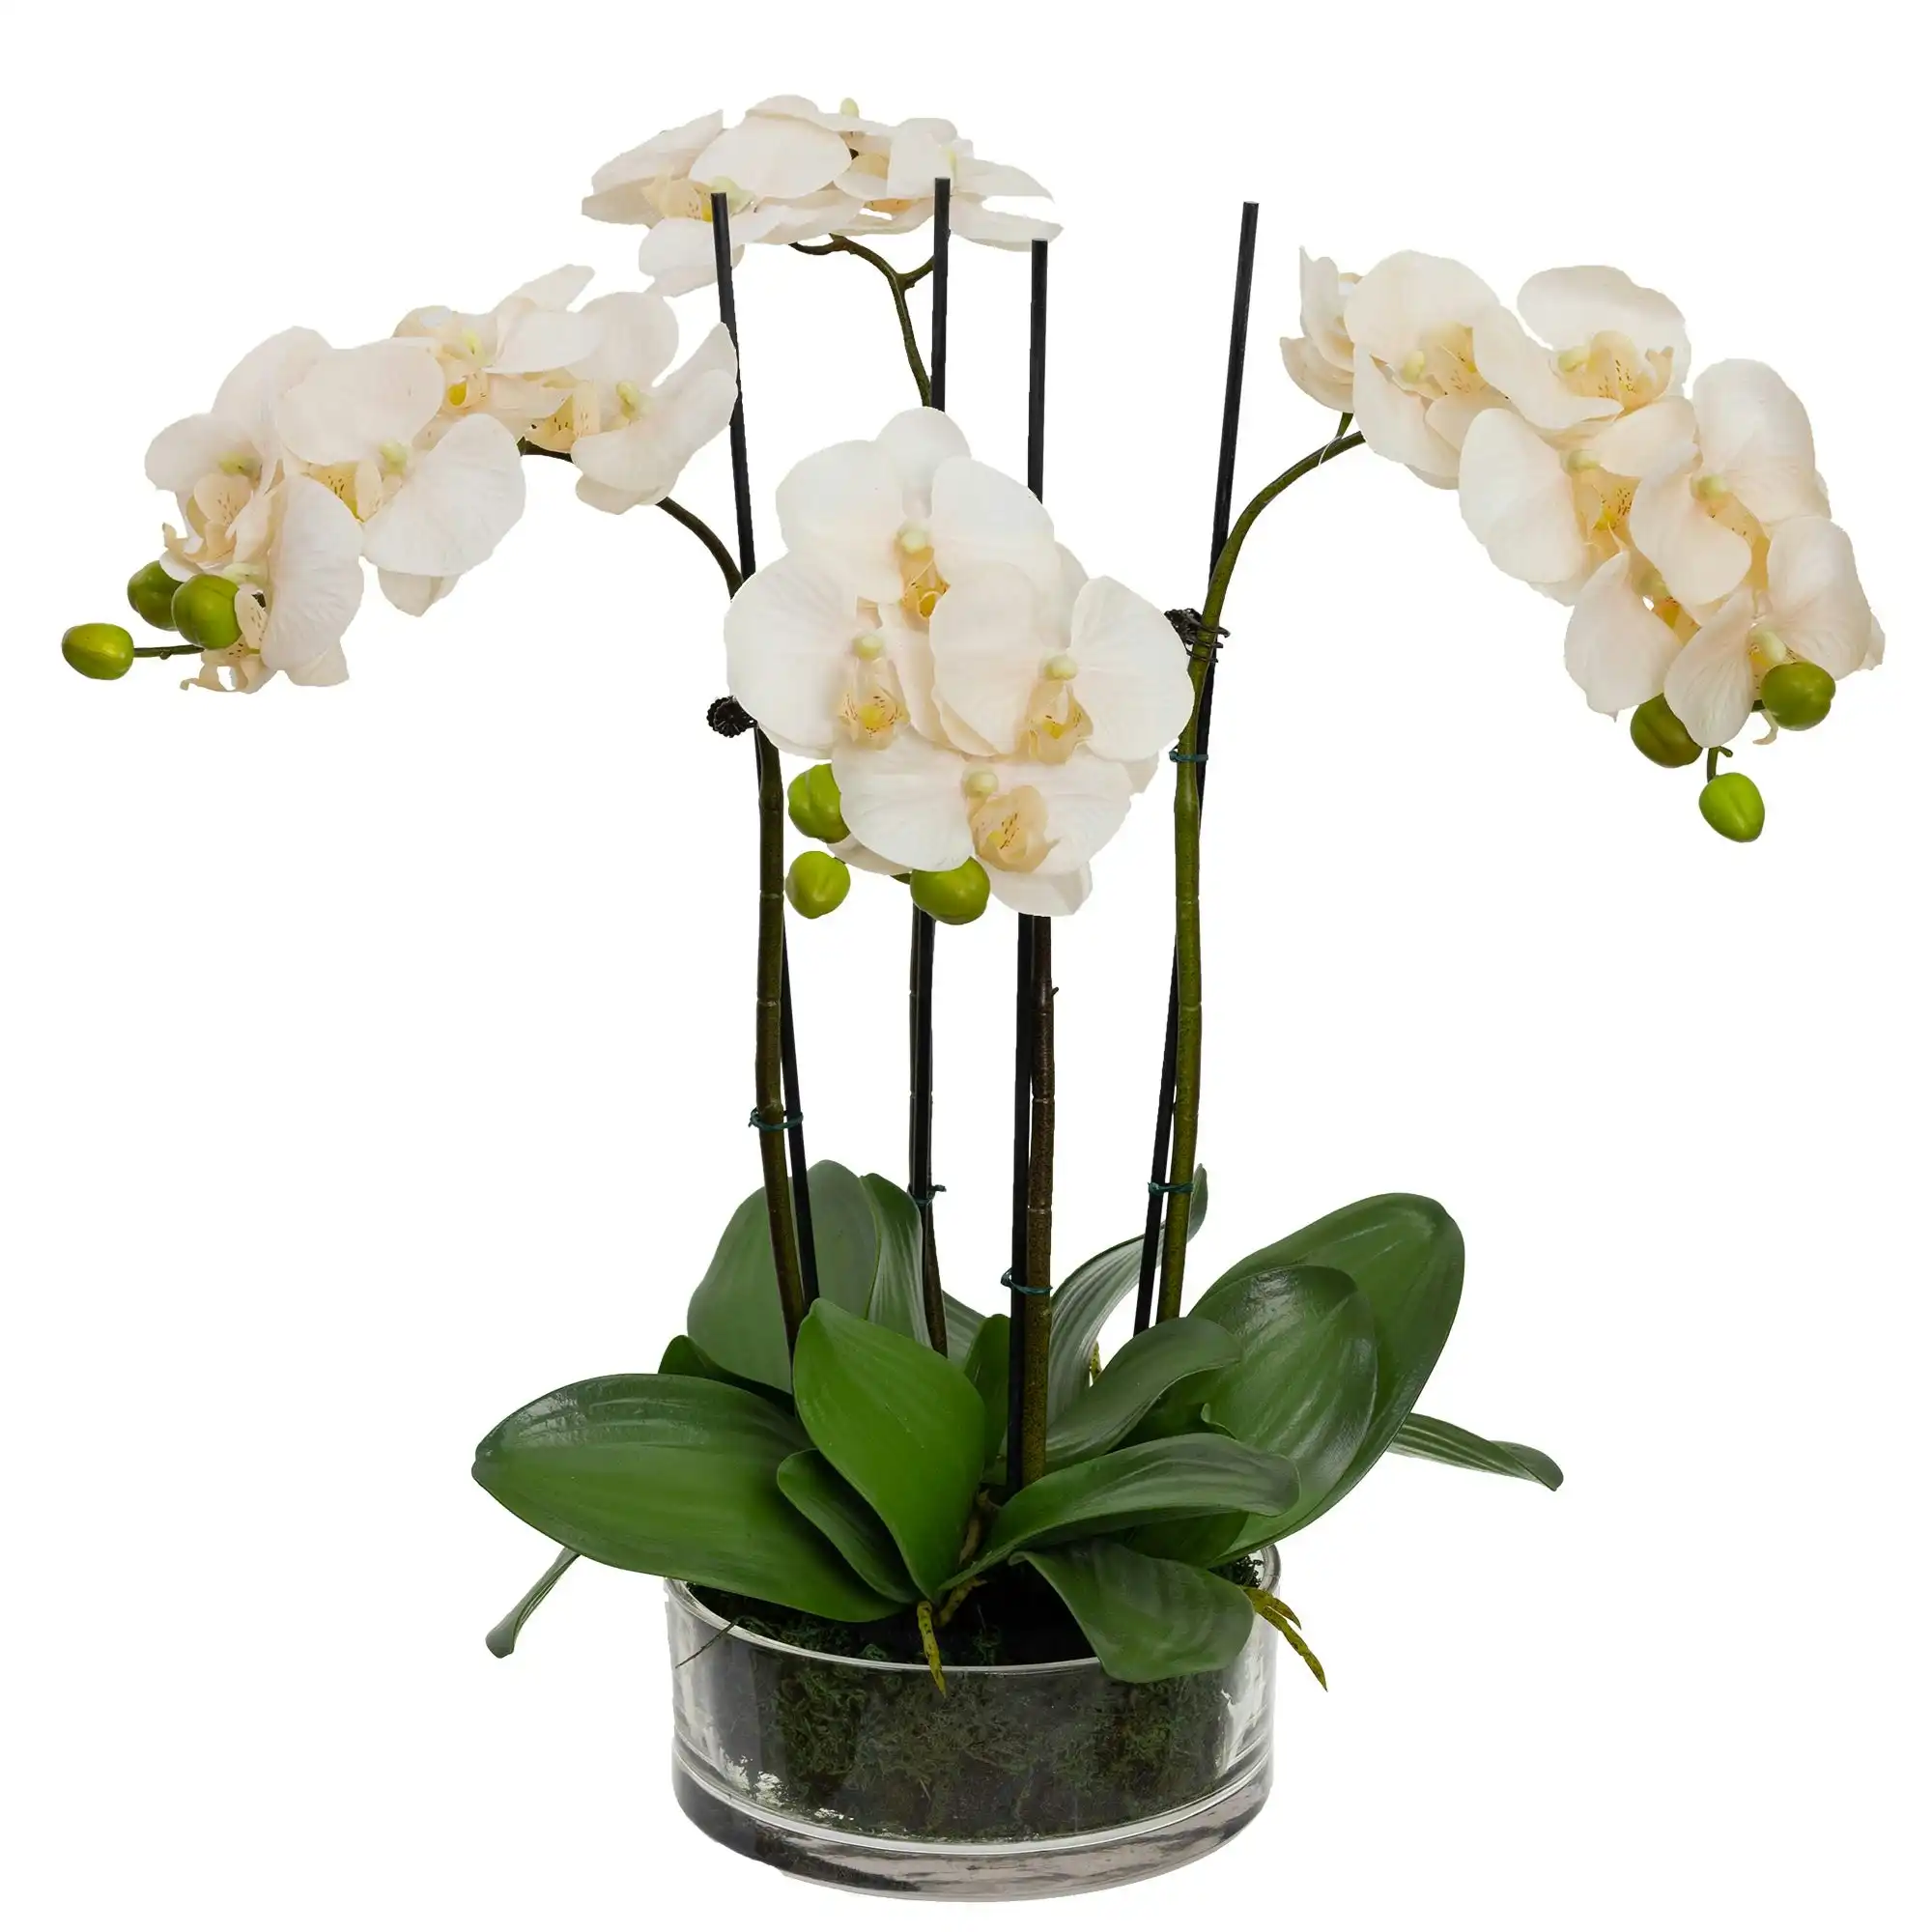 Glamorous Fusion Apricot Orchid Artificial Fake Plant Decorative Arrangement 48cm In Glass Bowl